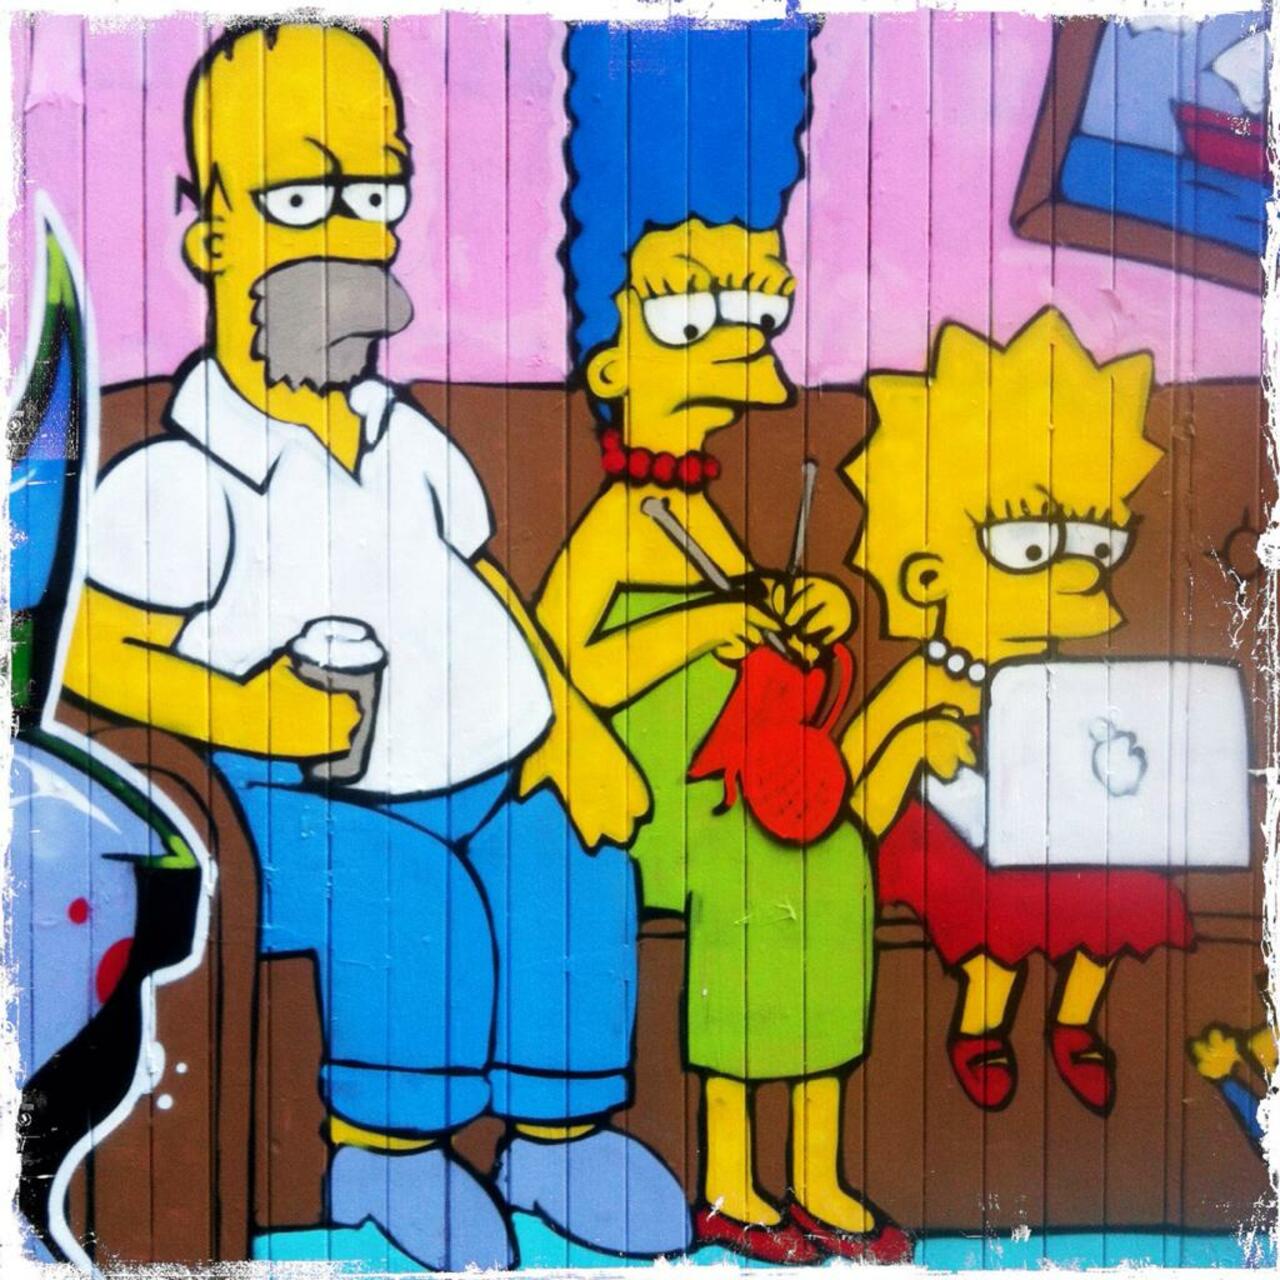 The Simpsons of Shoreditch - Fashion Street #streetart #graffiti http://t.co/oLQxDzux3d